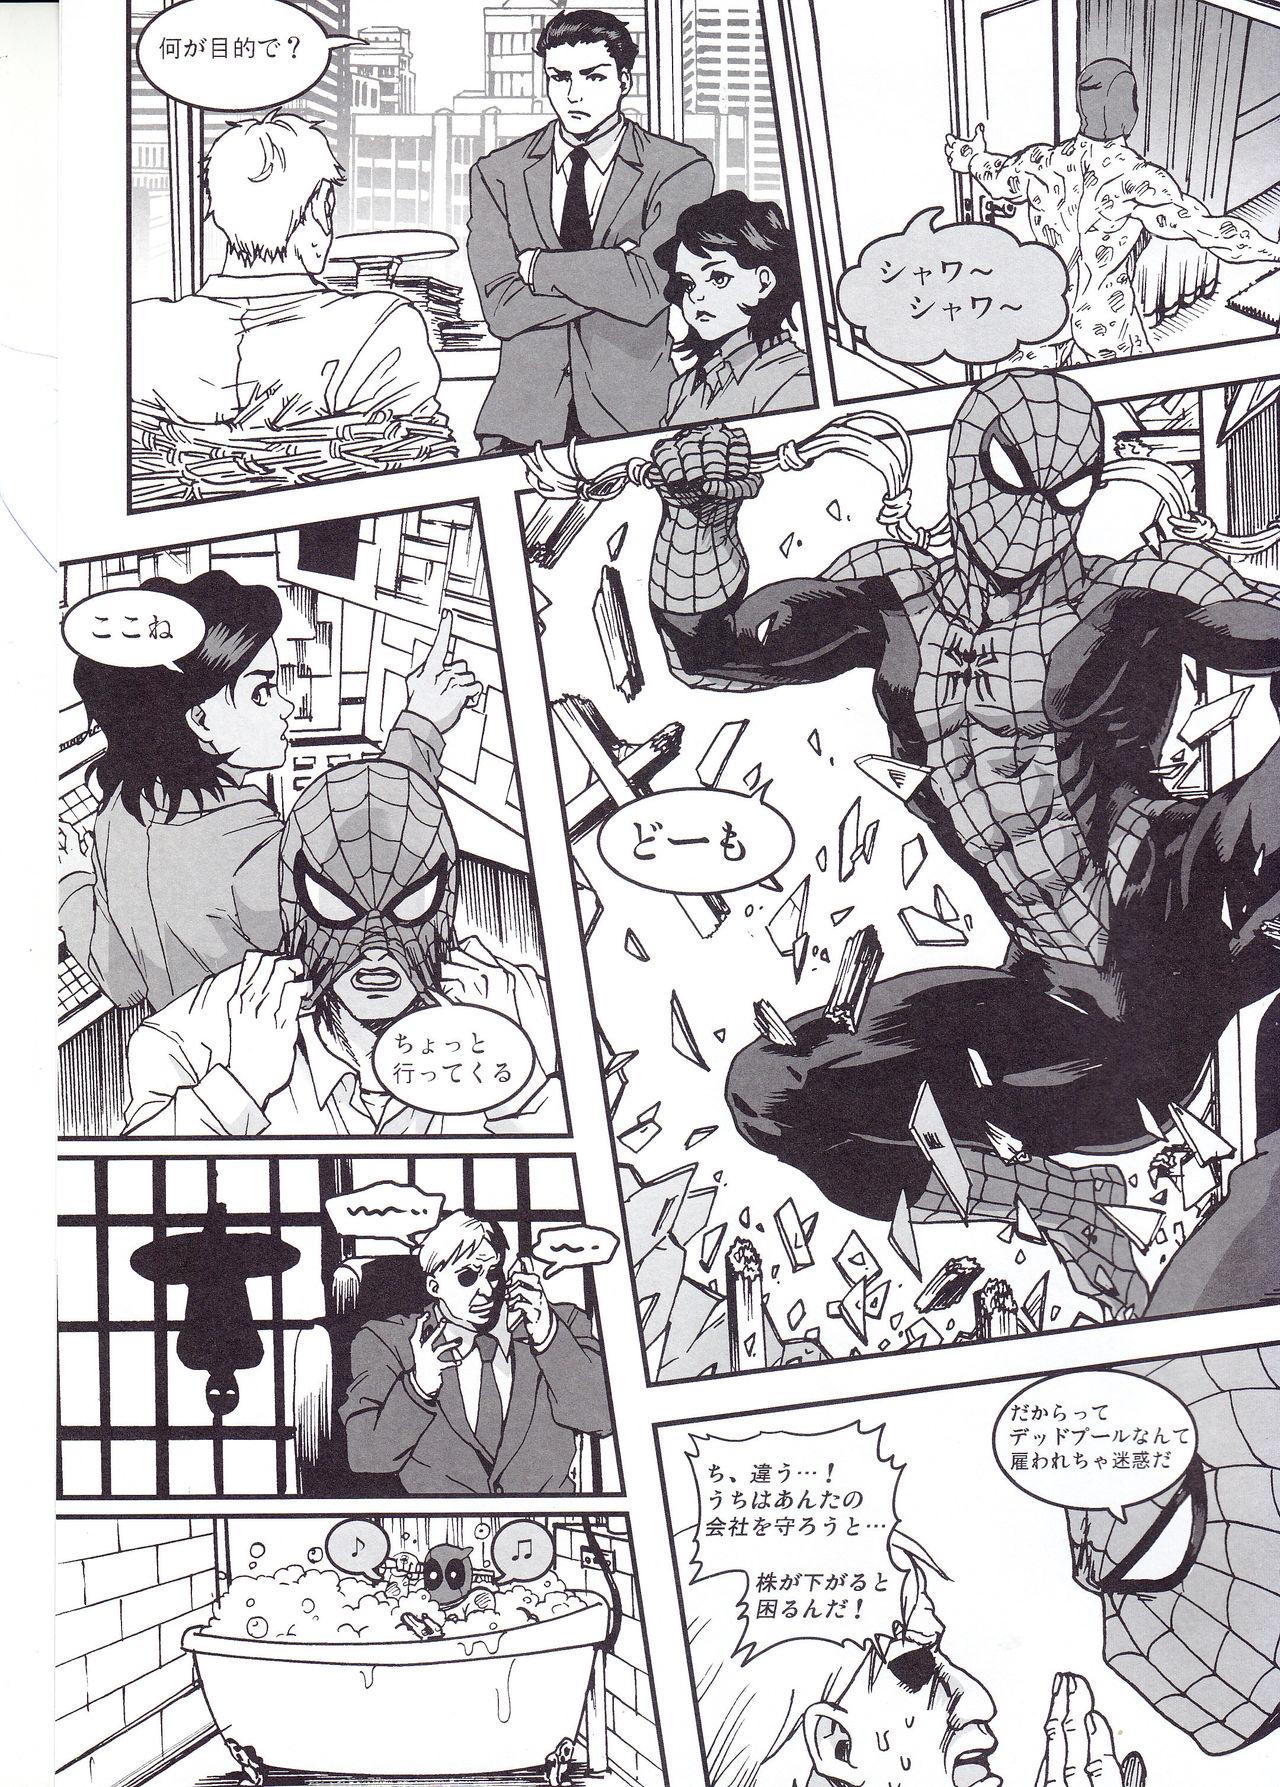 Balls THREE DAYS 2-3 - Spider-man Deadpool Pasivo - Page 3